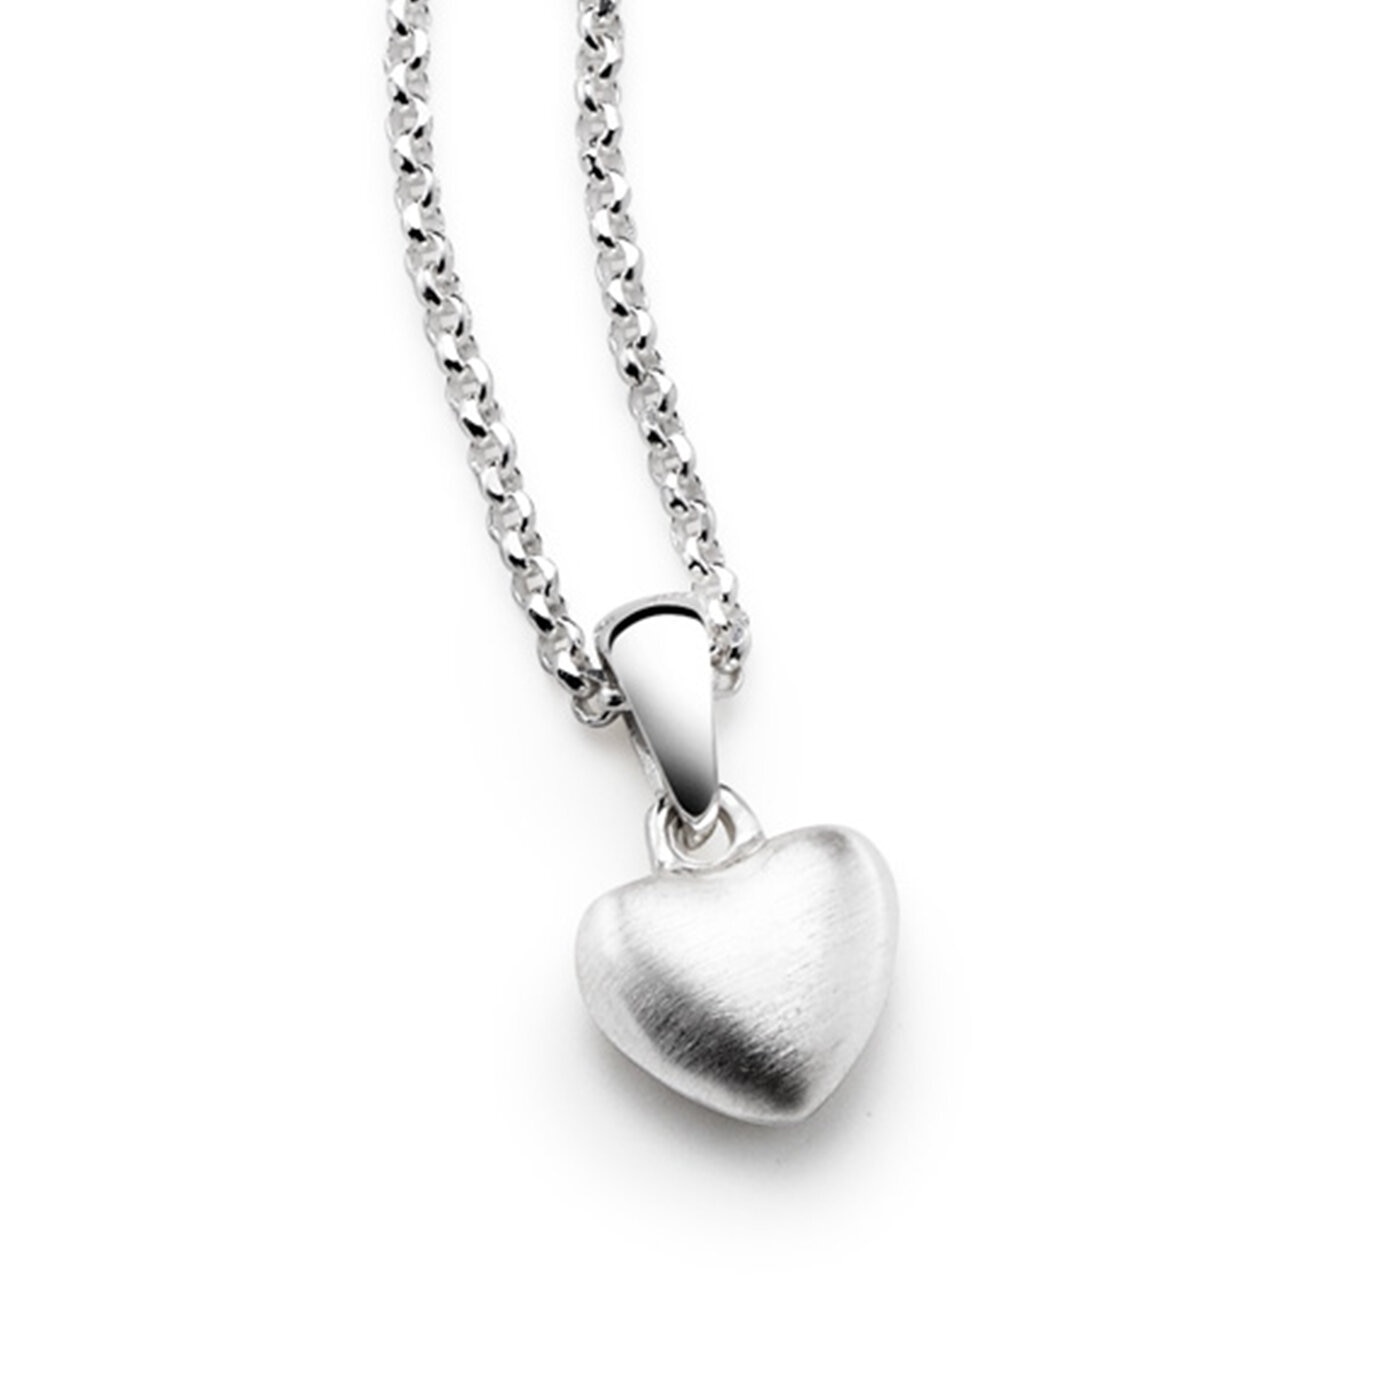 Satin heart necklace